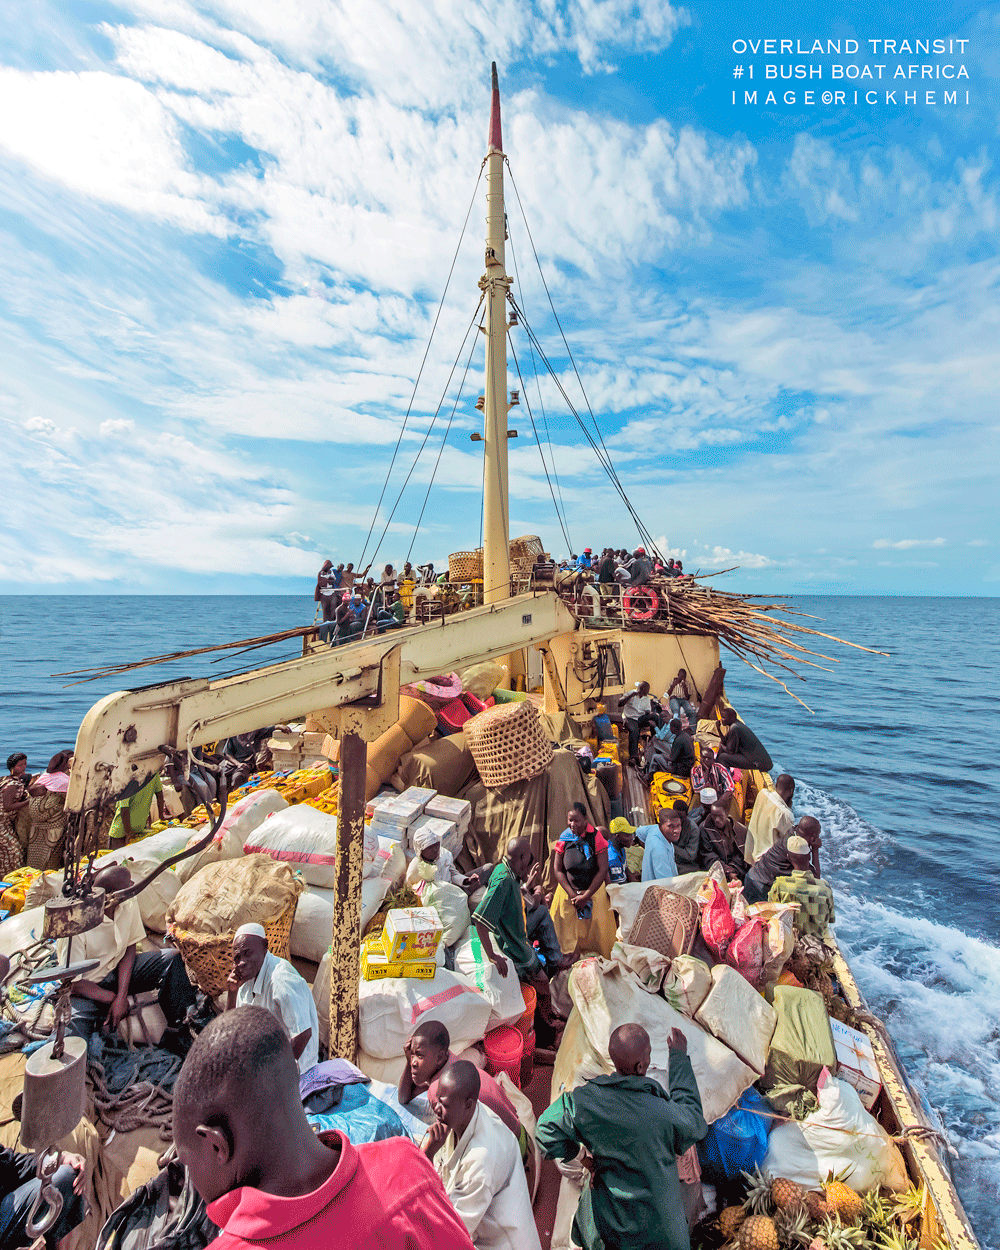 solo overland travel offshore, overland Africa, #1 bush boat transit Africa, DSLR image by Rick Hemi